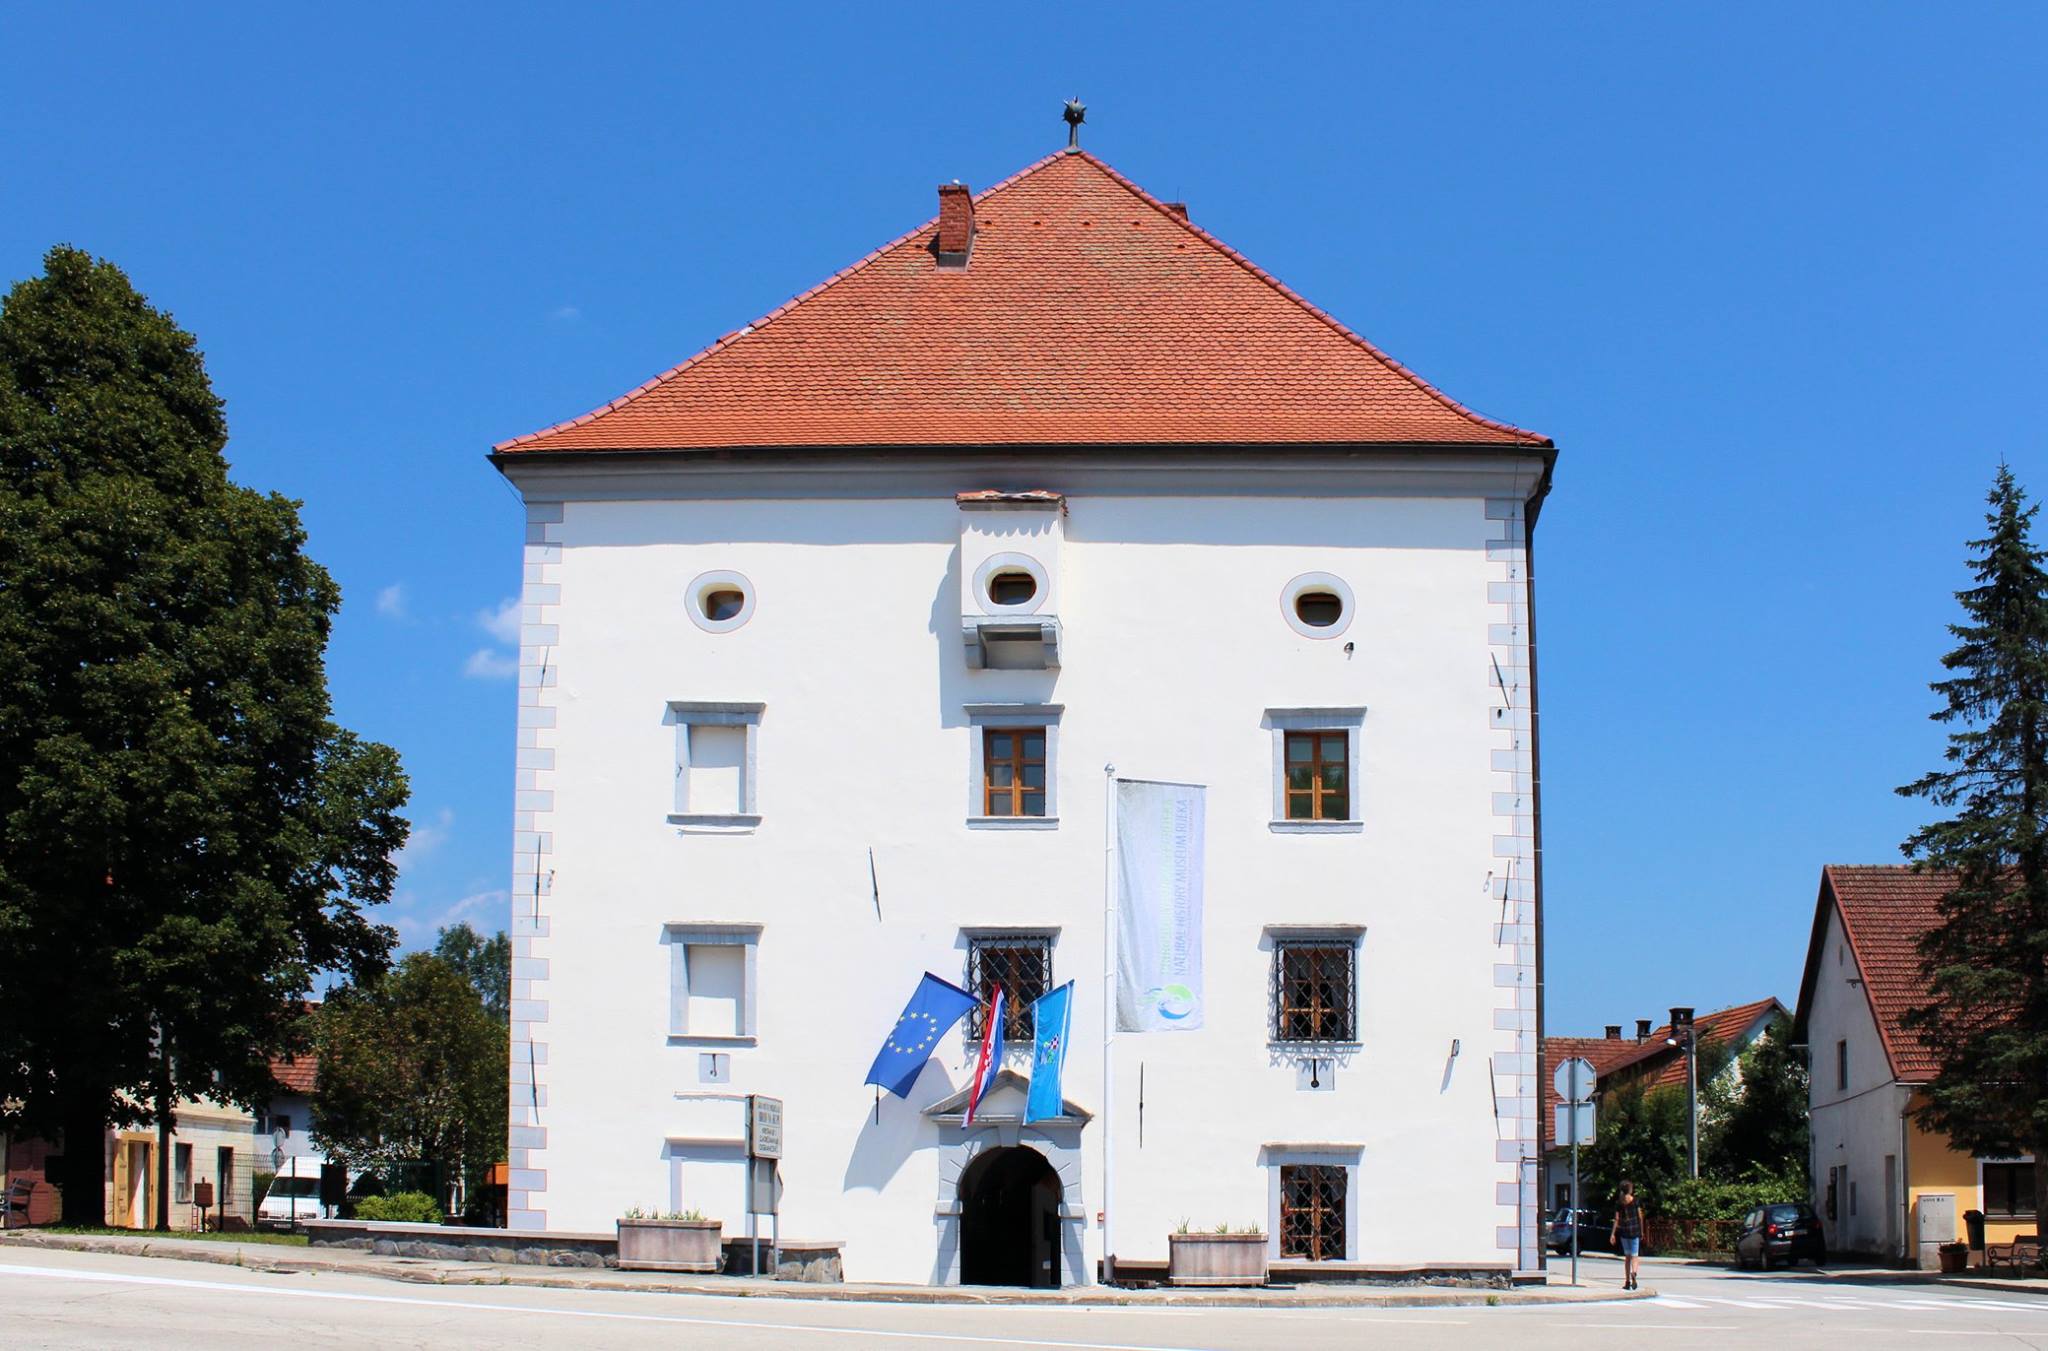 Zrinski castle